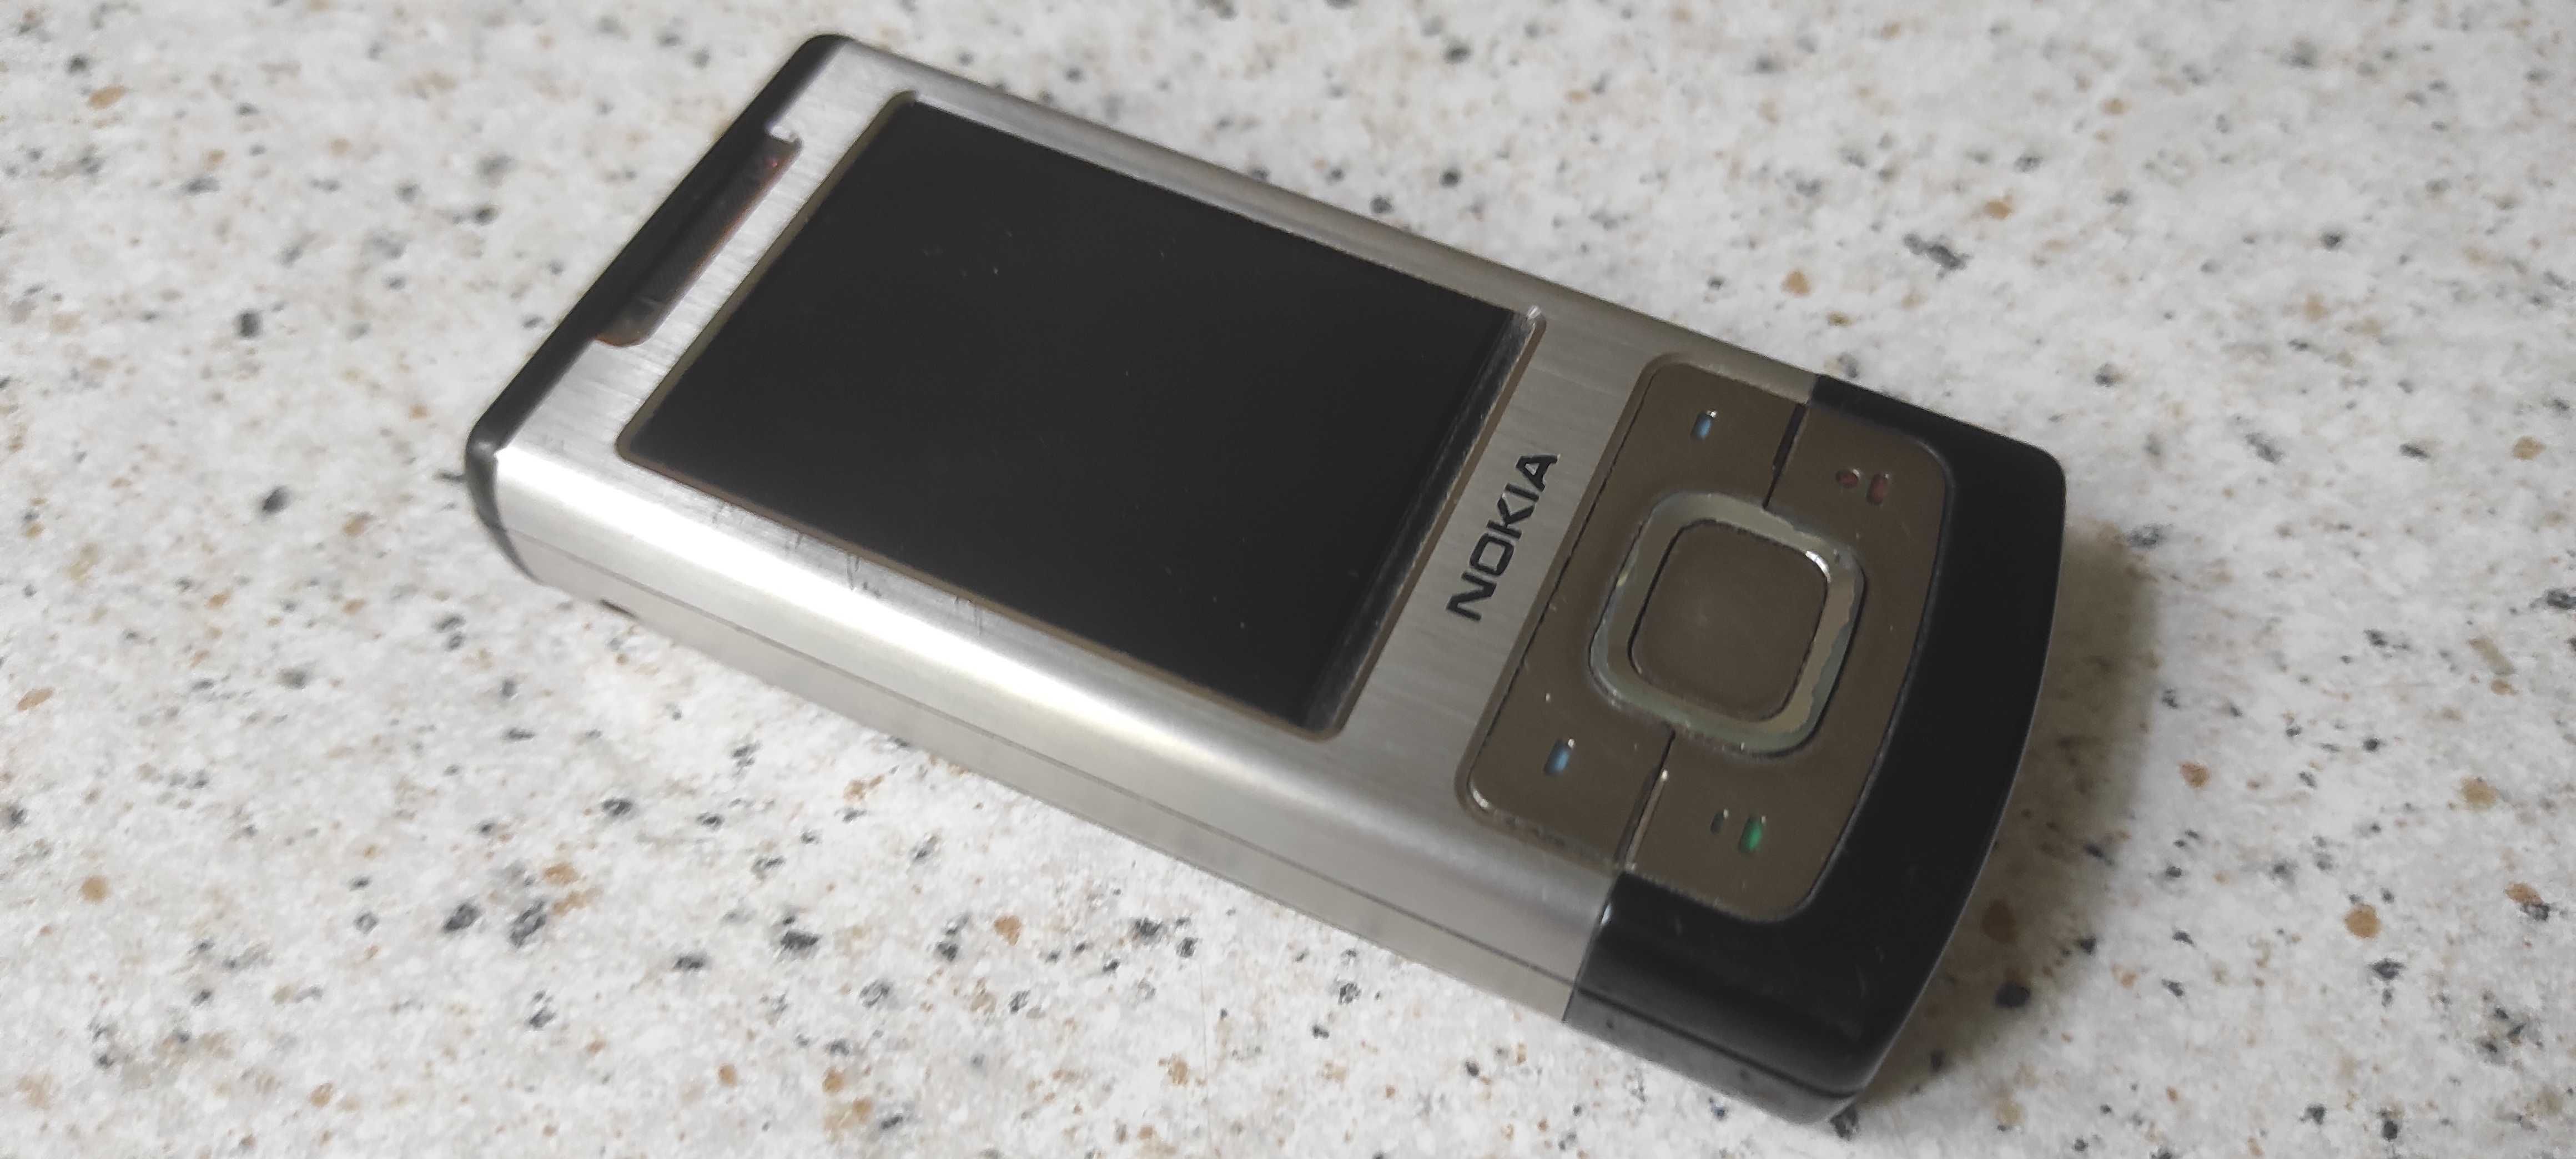 Nokia 6500 Slide Производство : Финляндия. Оригинал. Б\У